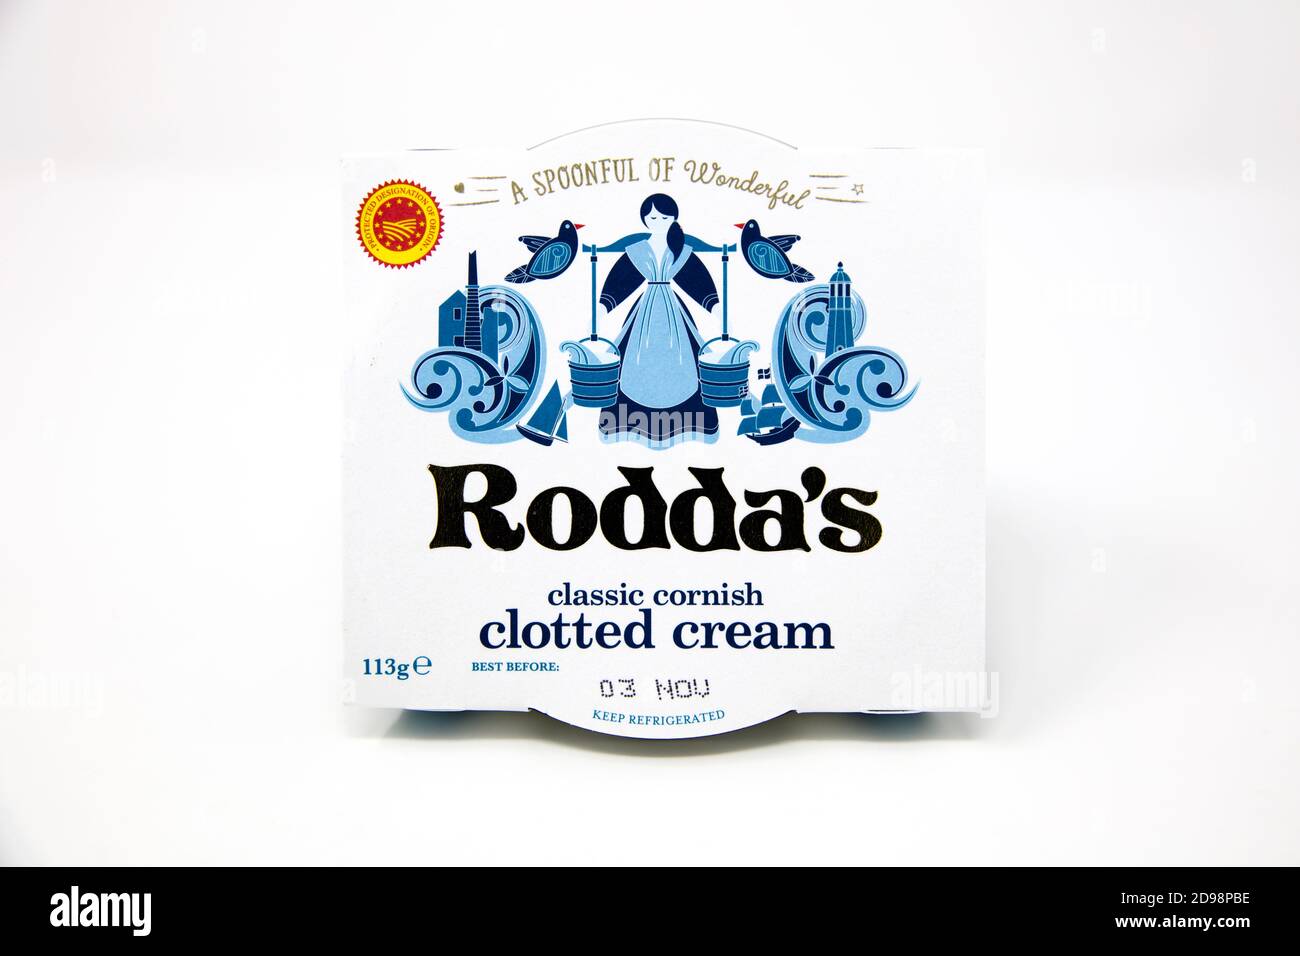 Rodda's Cornish Cloted Cream Stockfoto